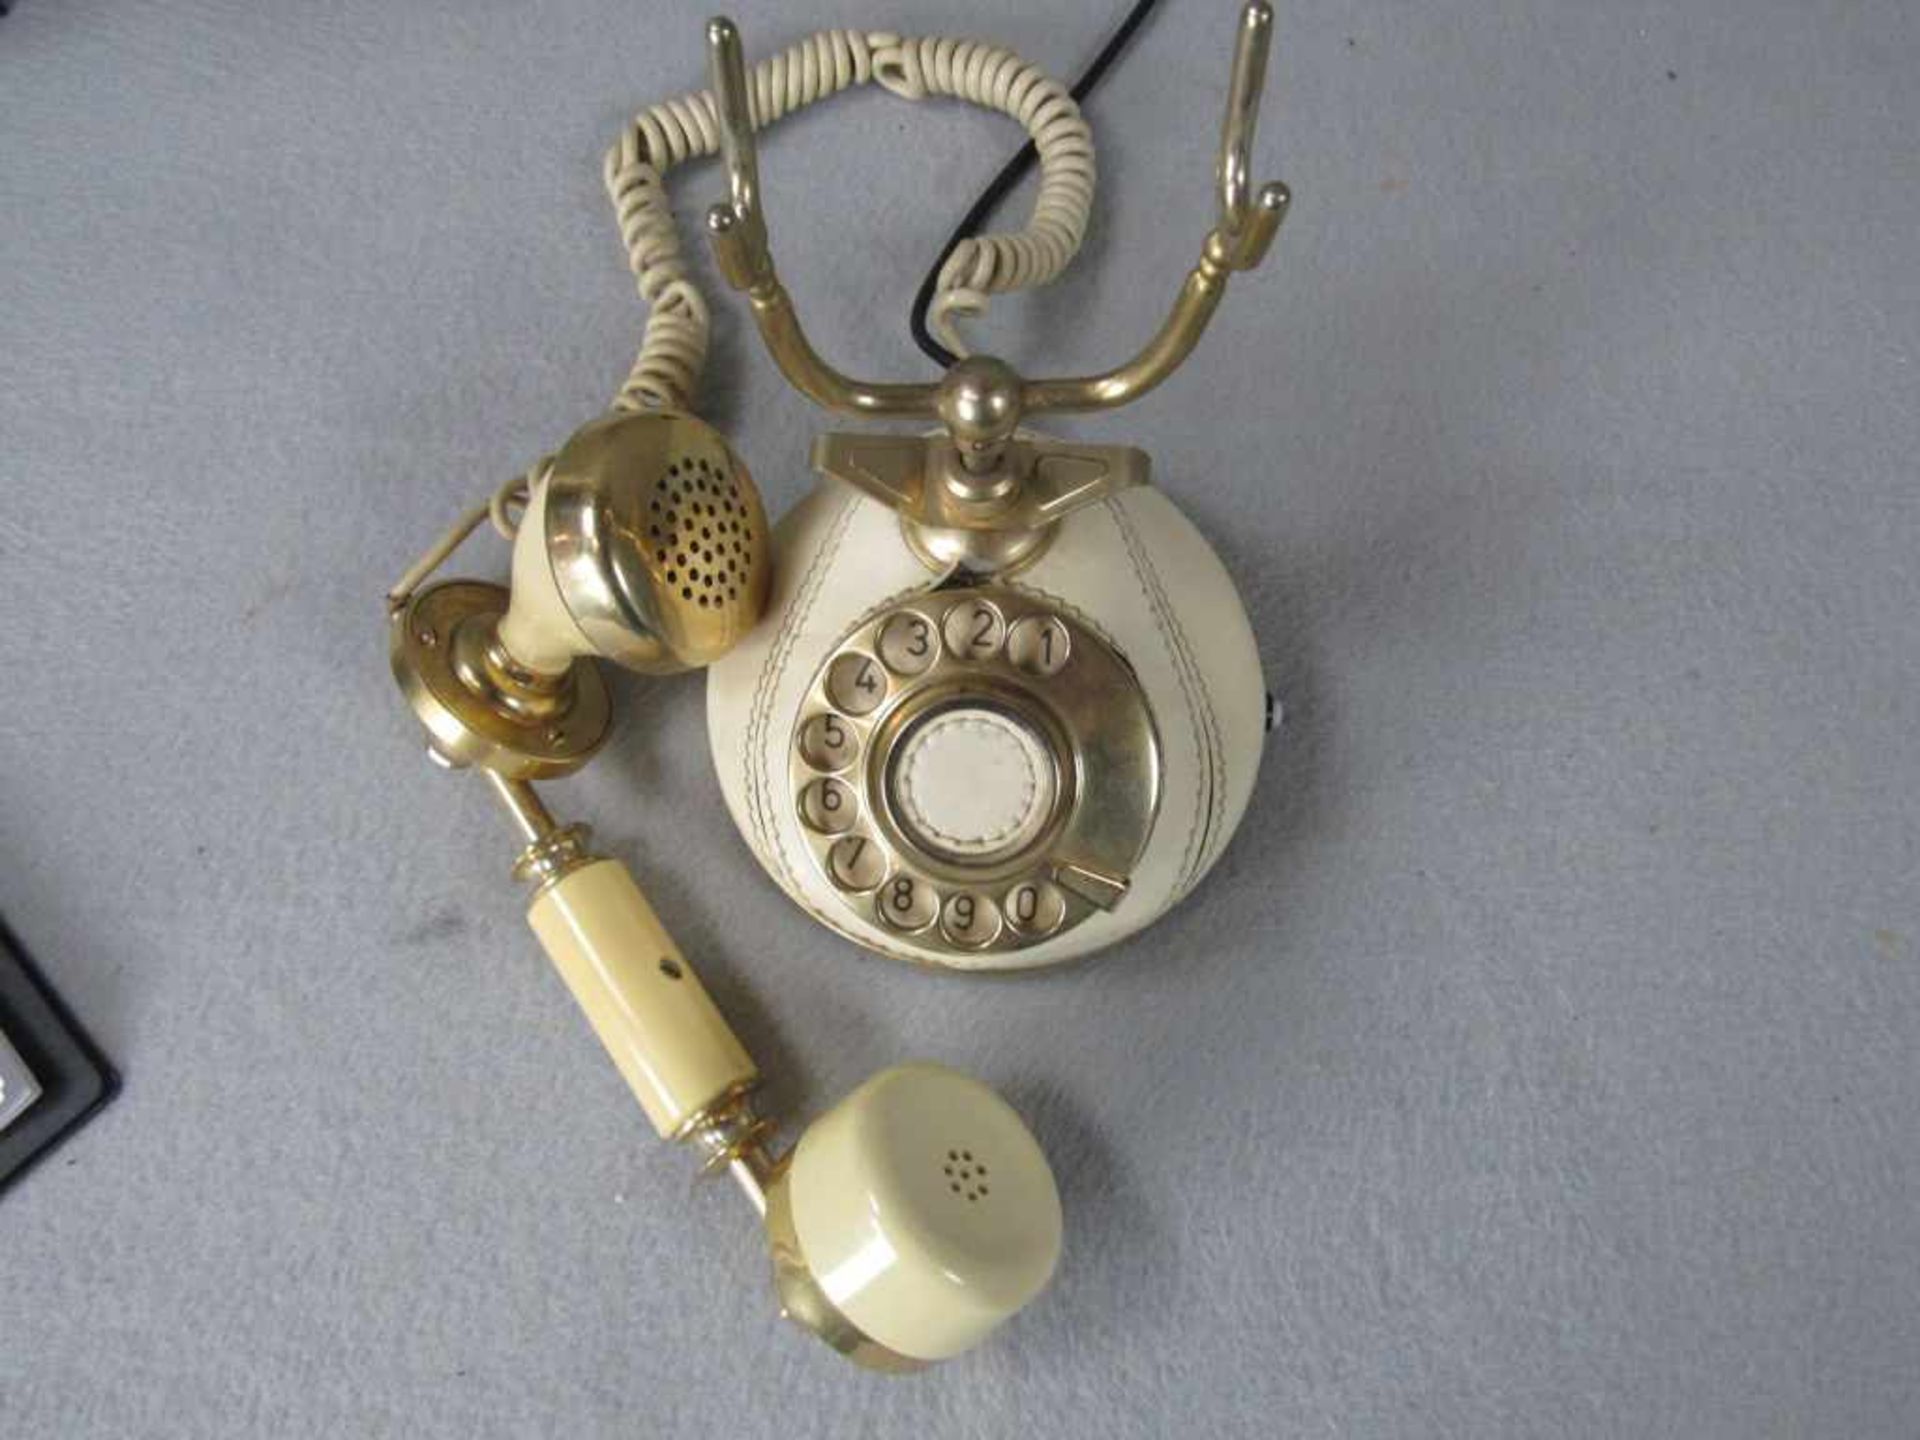 Space Age 70er Jahre Telefon vergoldet 18 Karat Lederbezogen - Bild 3 aus 3